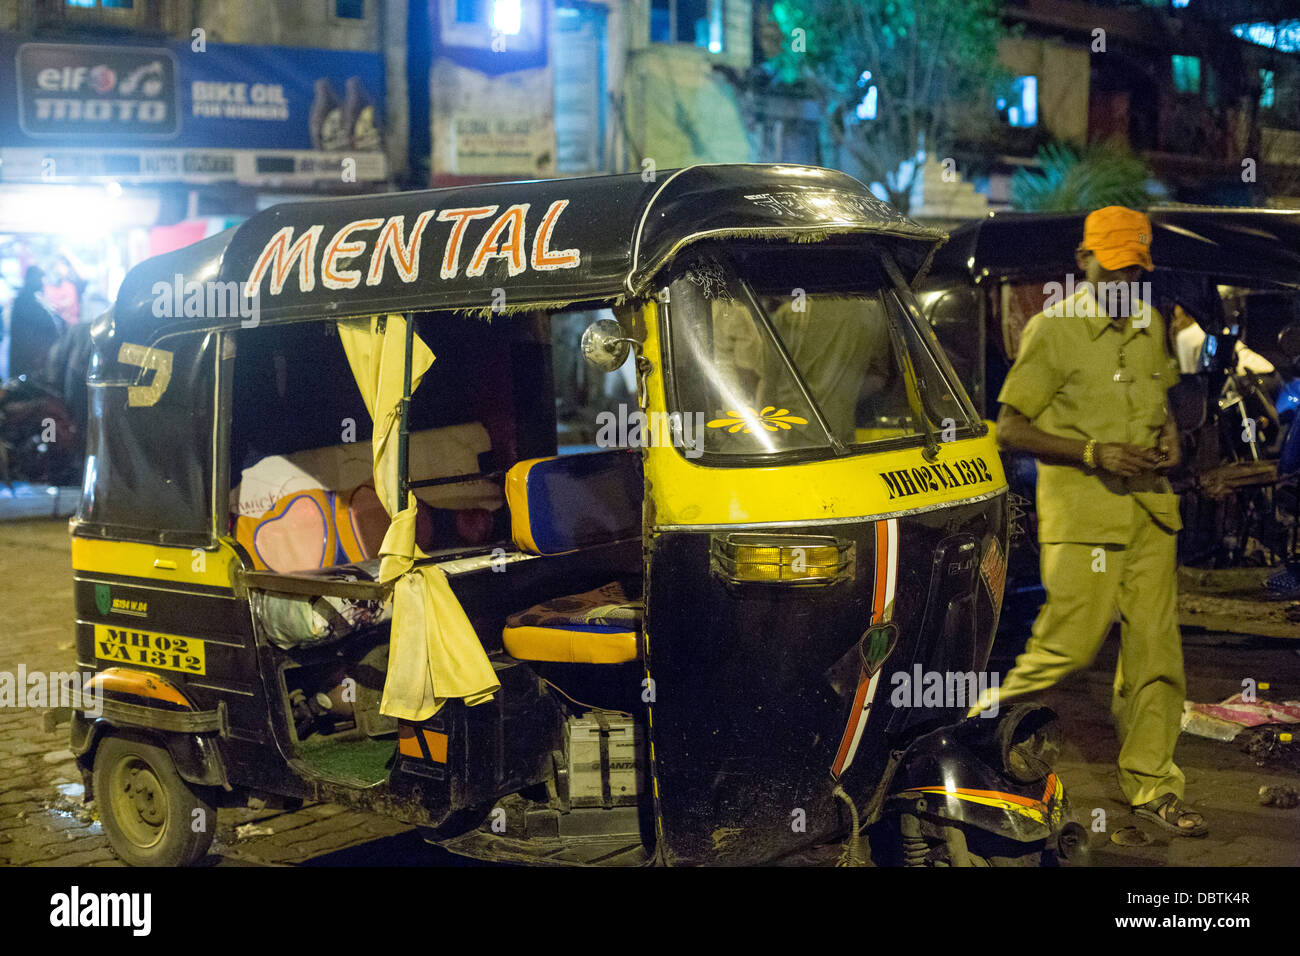 Auto rickshaw tuktuk with sign mental written on side Stock Photo